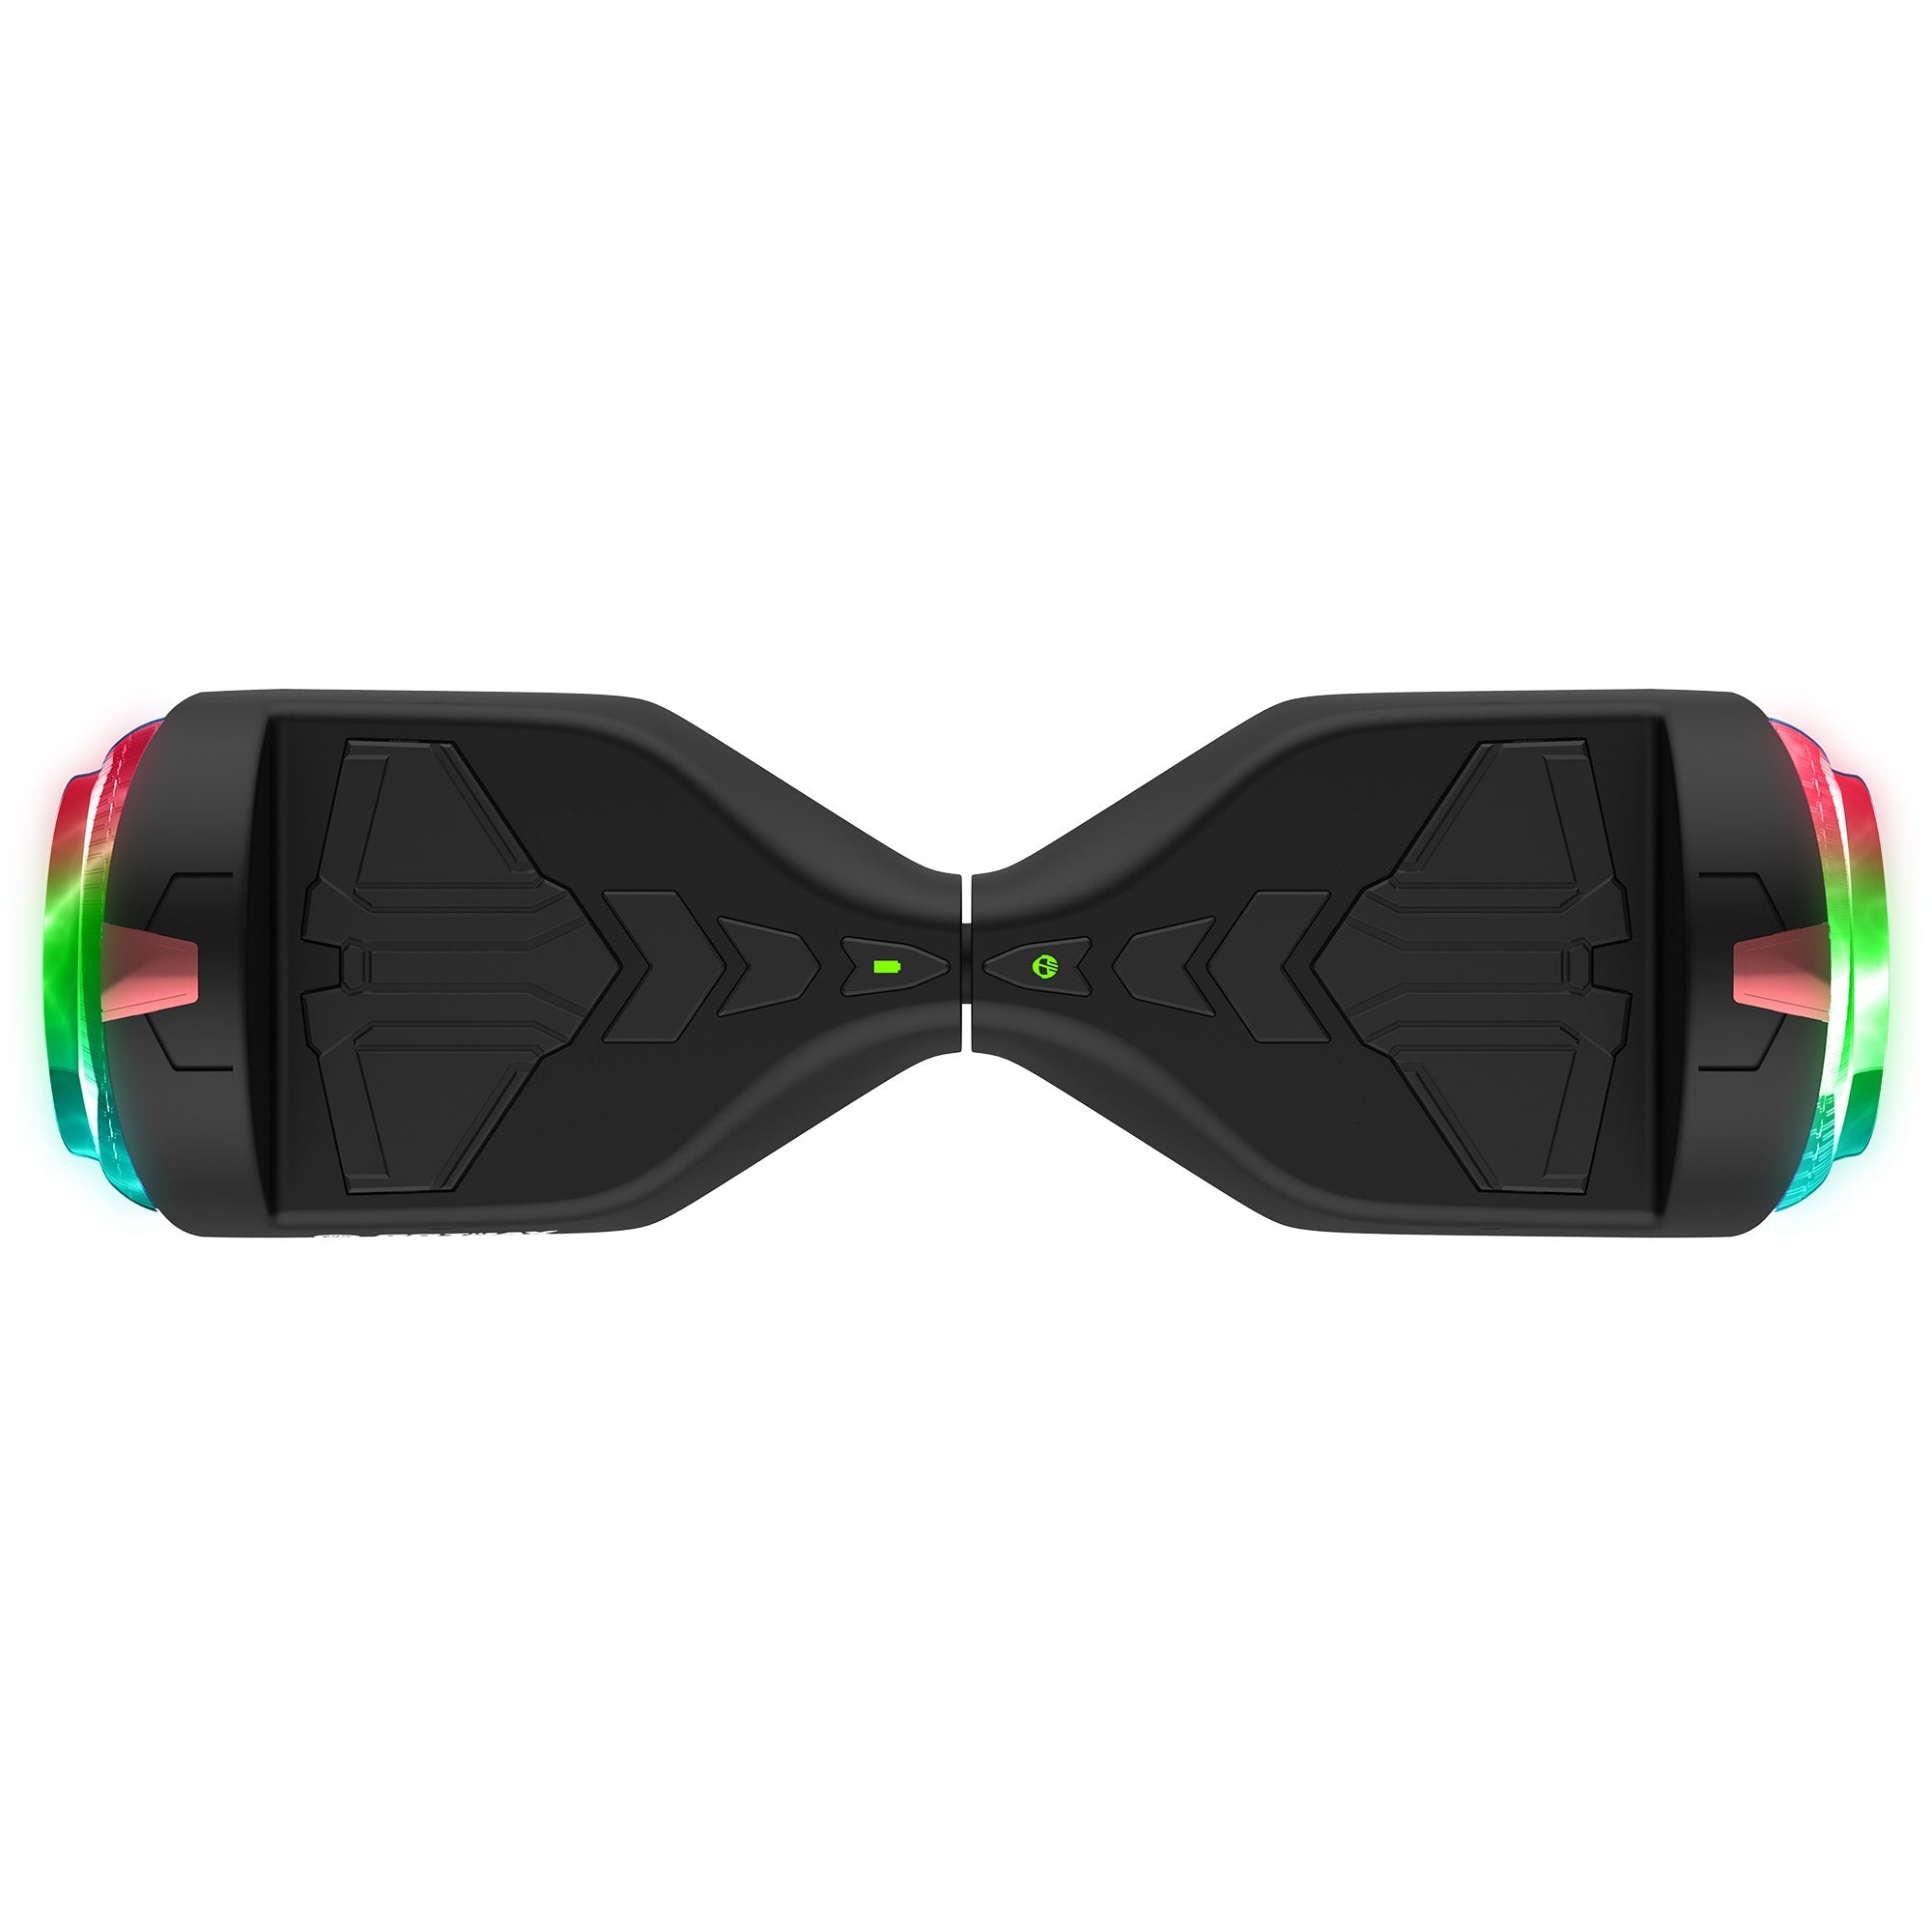 Gotrax Kids' Pulse Lumios Hoverboard - Black : Target